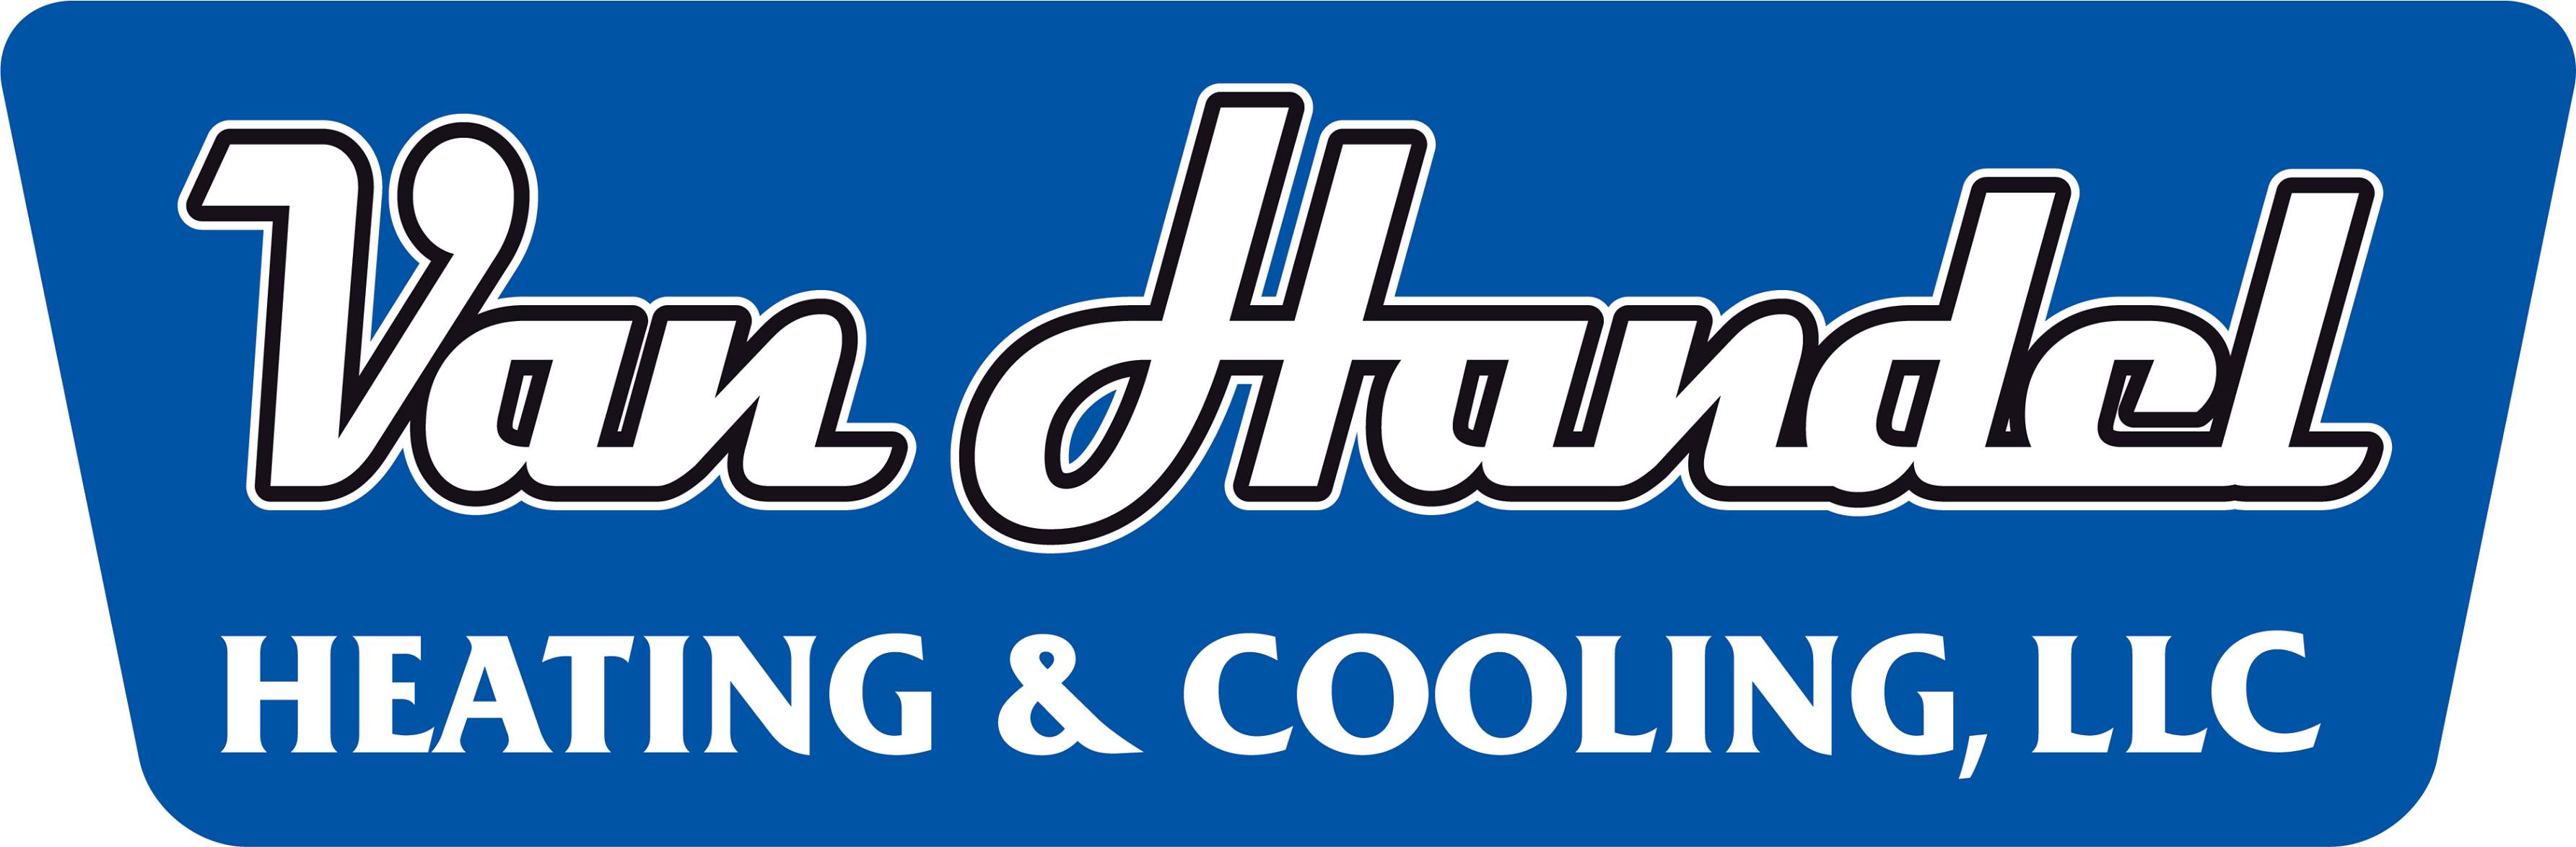 Van Handel Heating & Cooling N3225 WI-15, Hortonville Wisconsin 54944